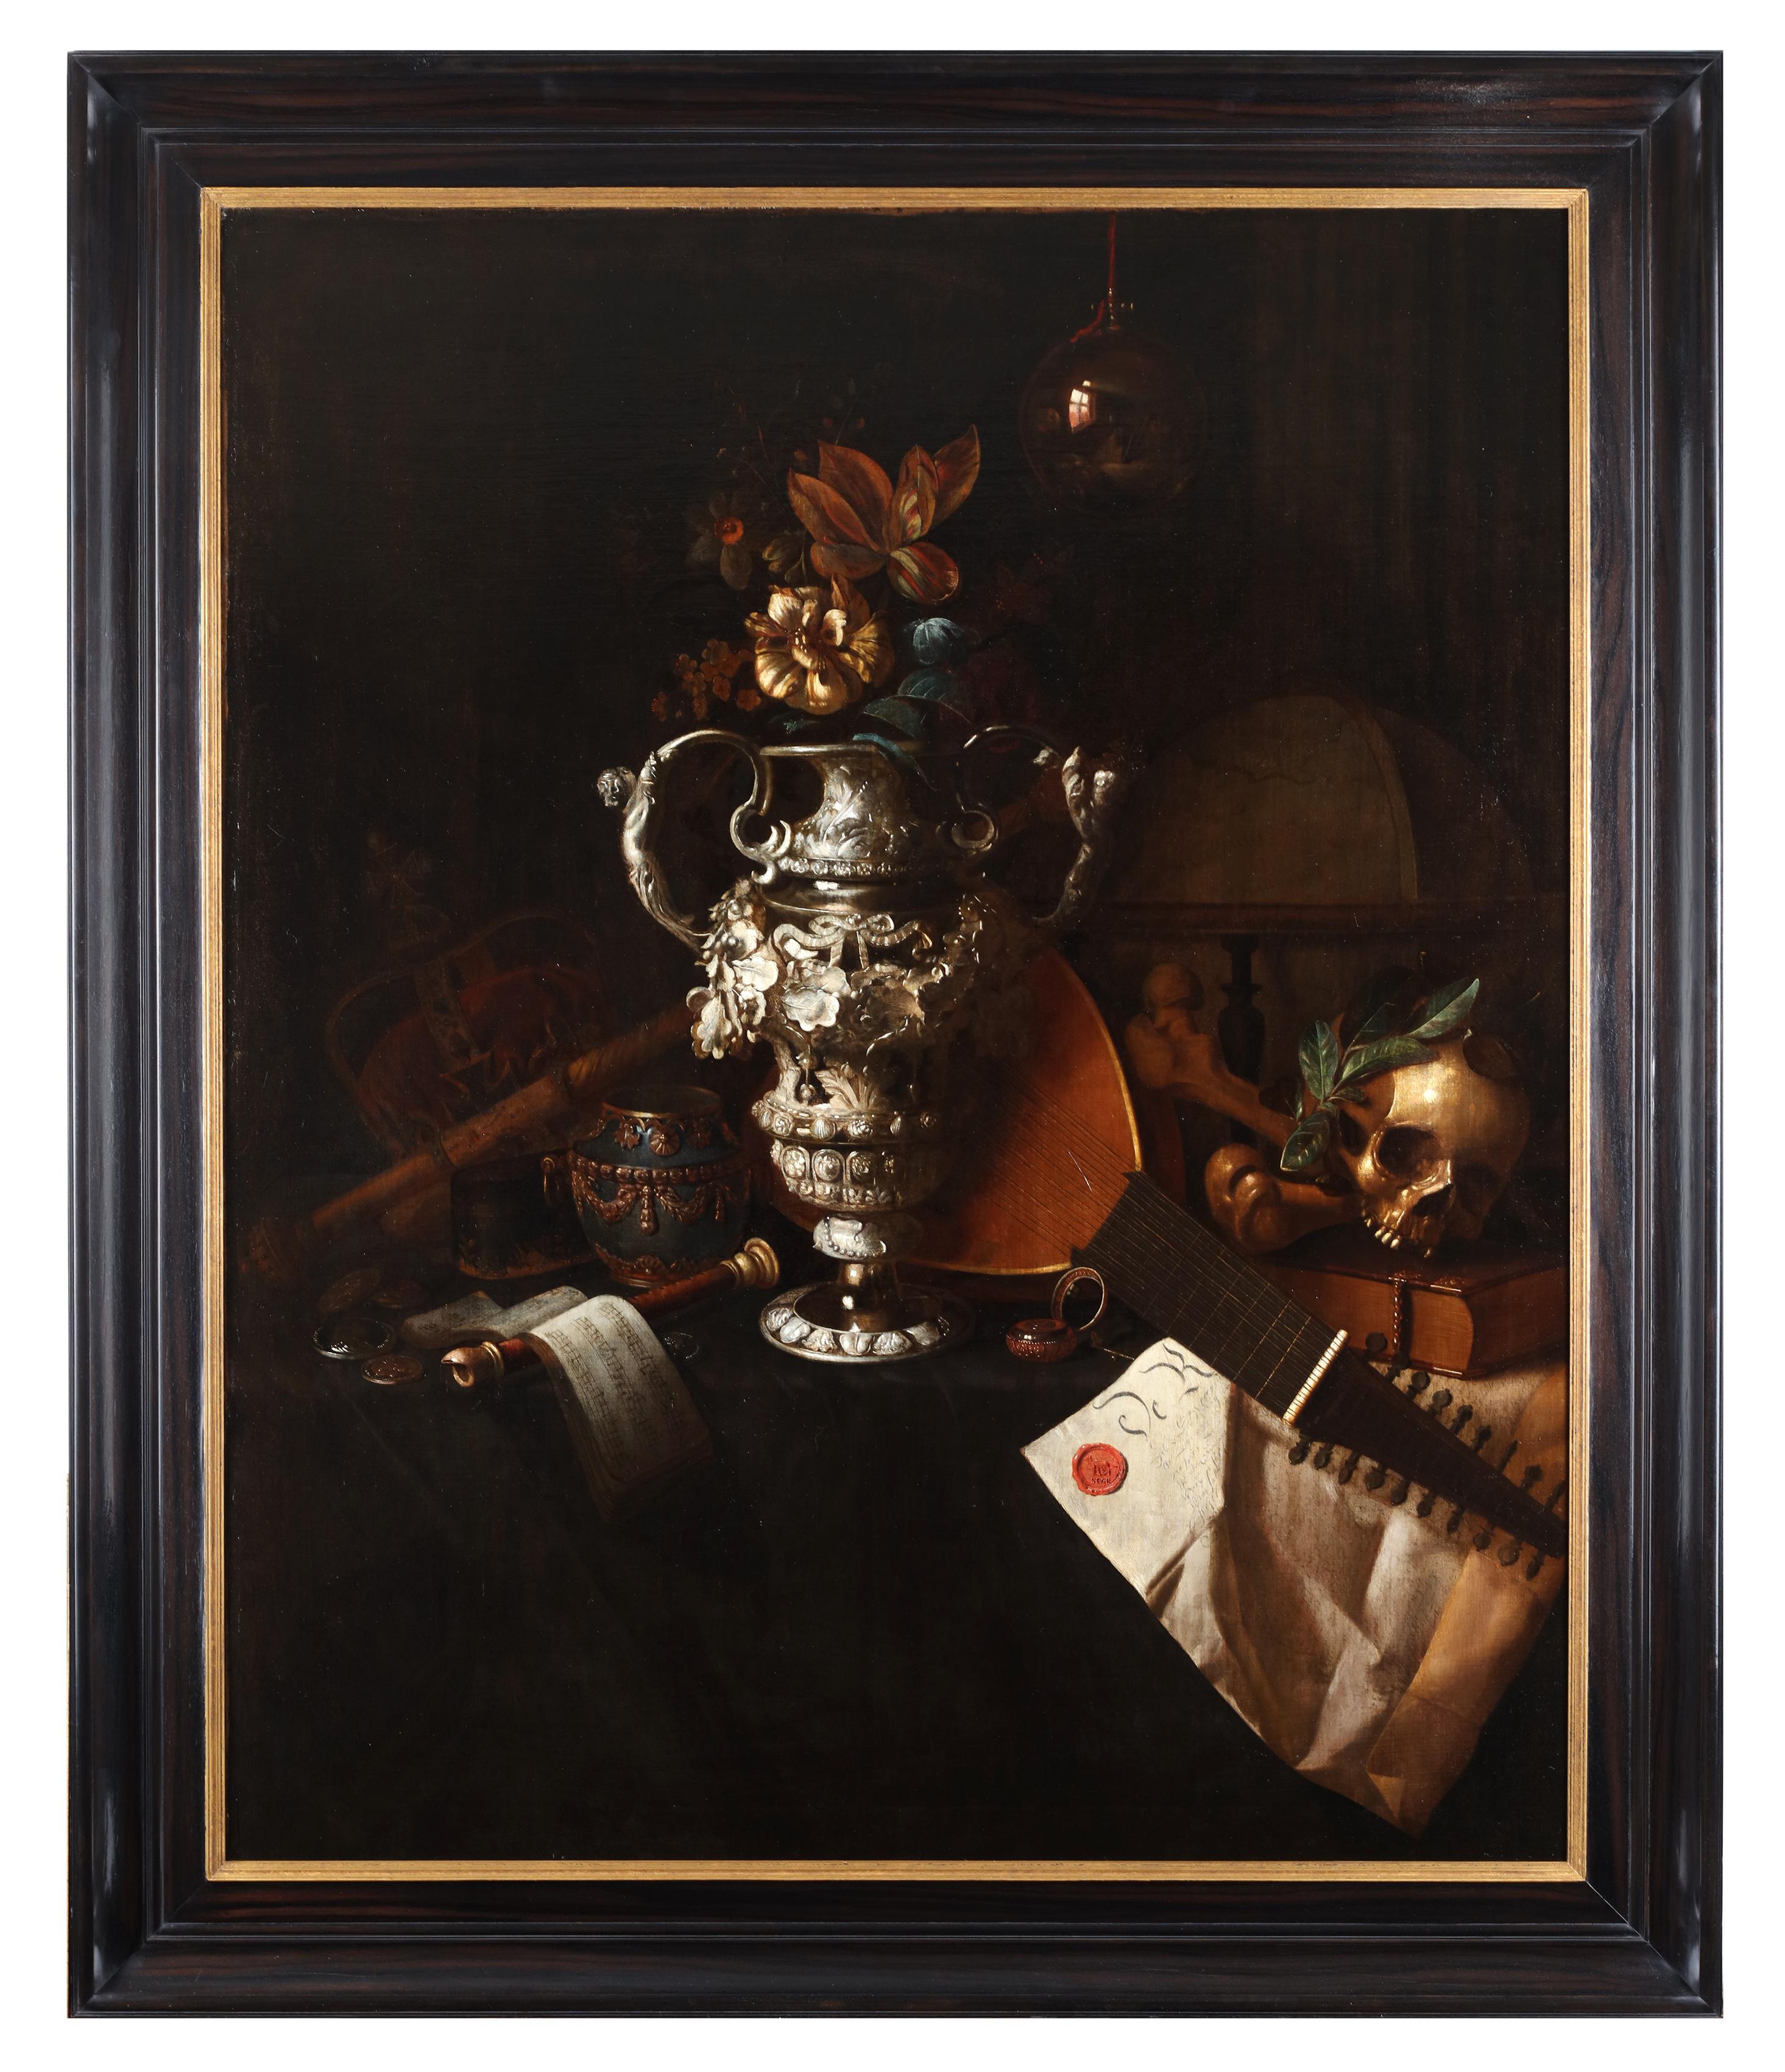 A vanitas still life with an elaborate silver vase - Pieter Roestraeten  1